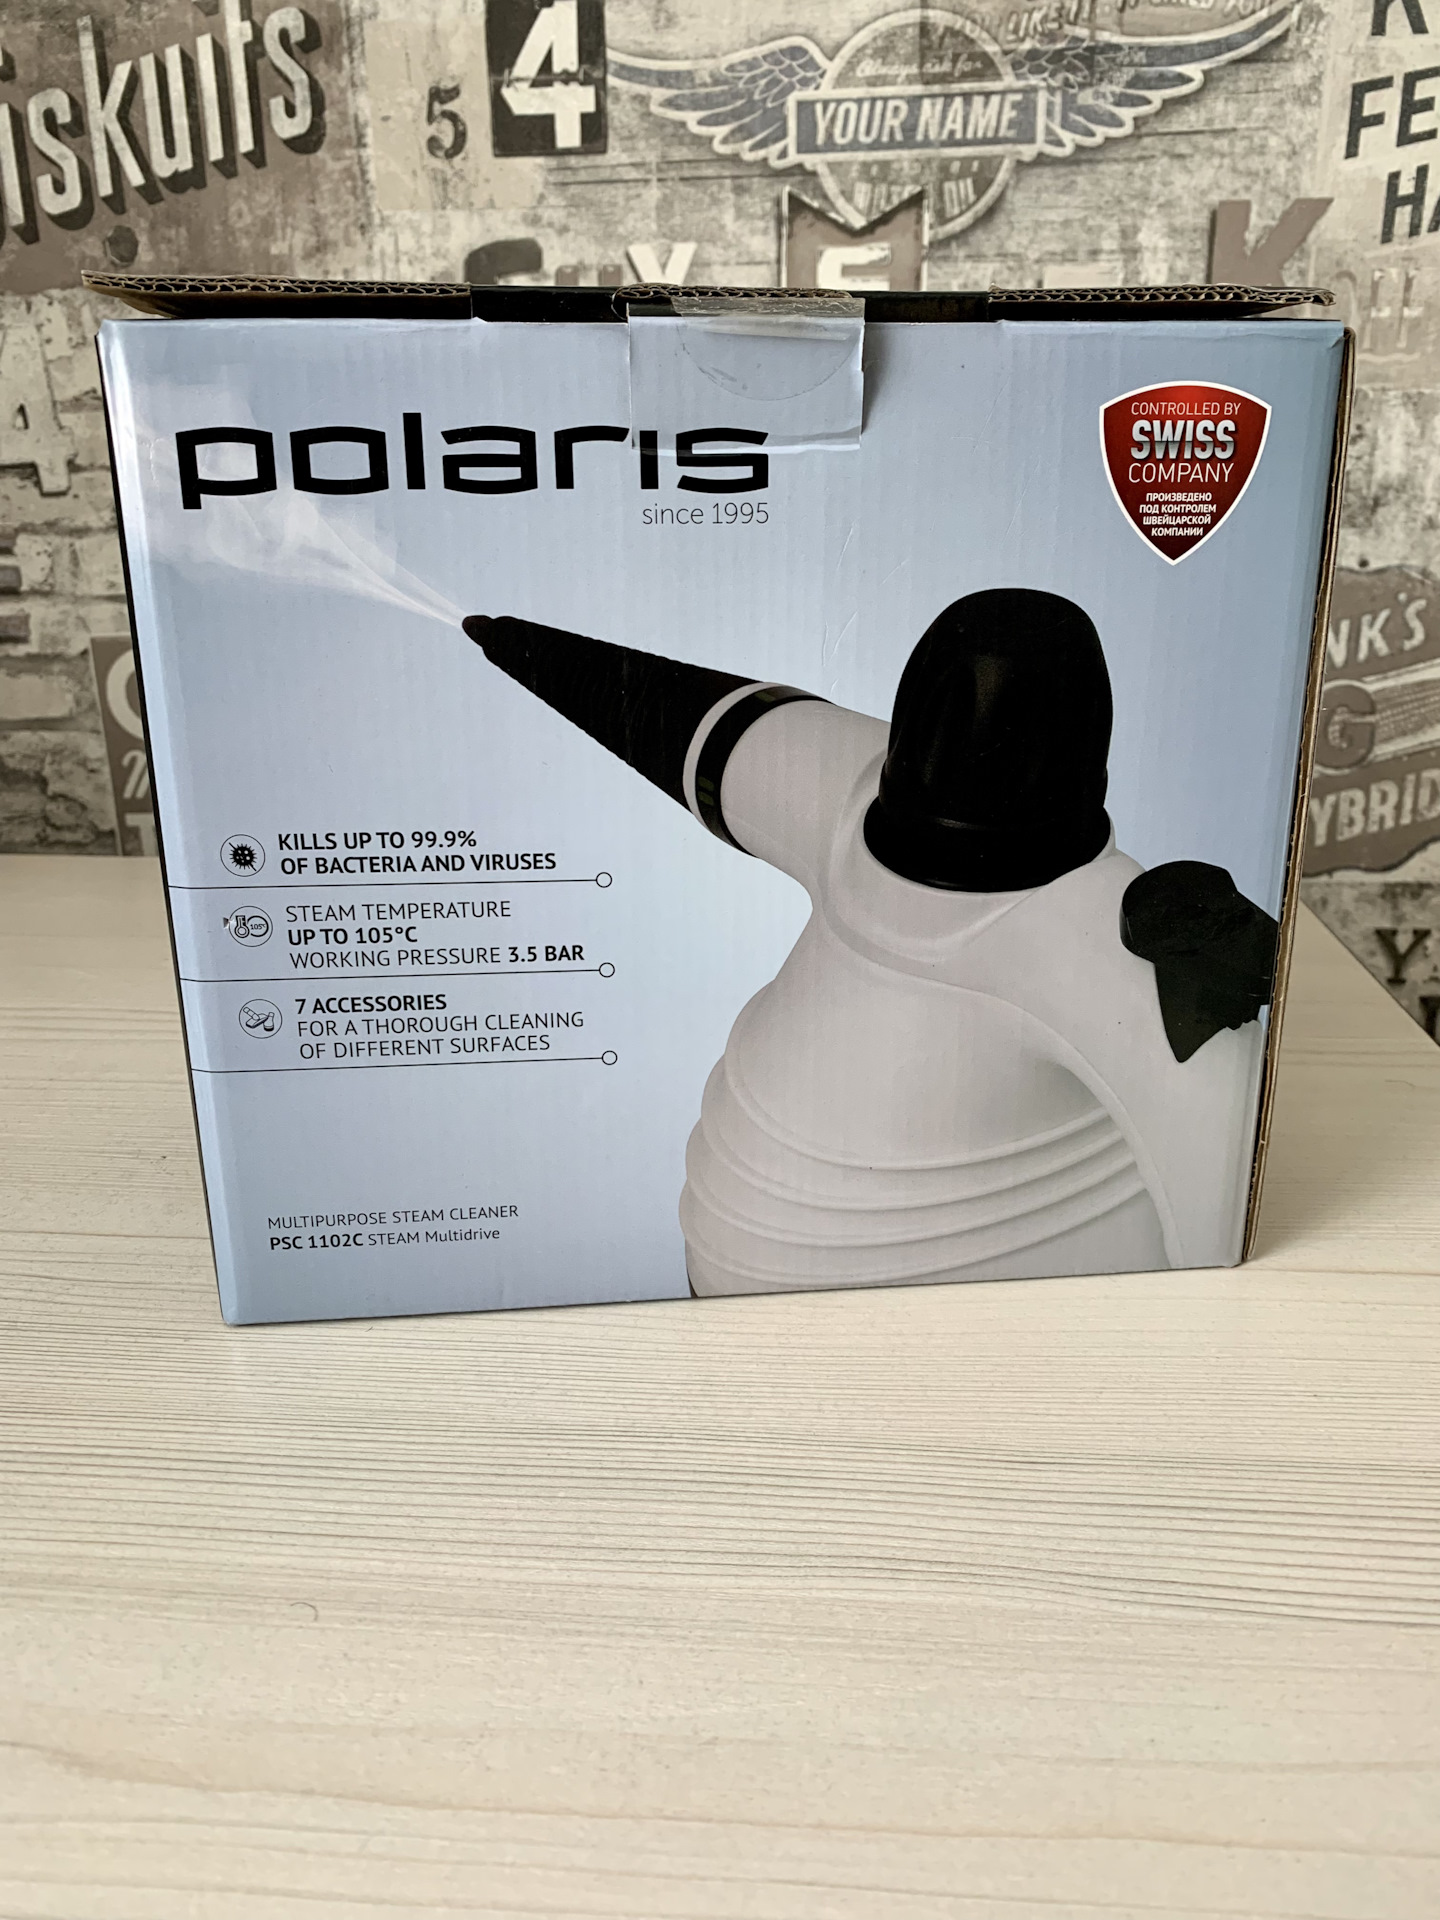 Polaris psc 1102 c steam multidrive фото 4